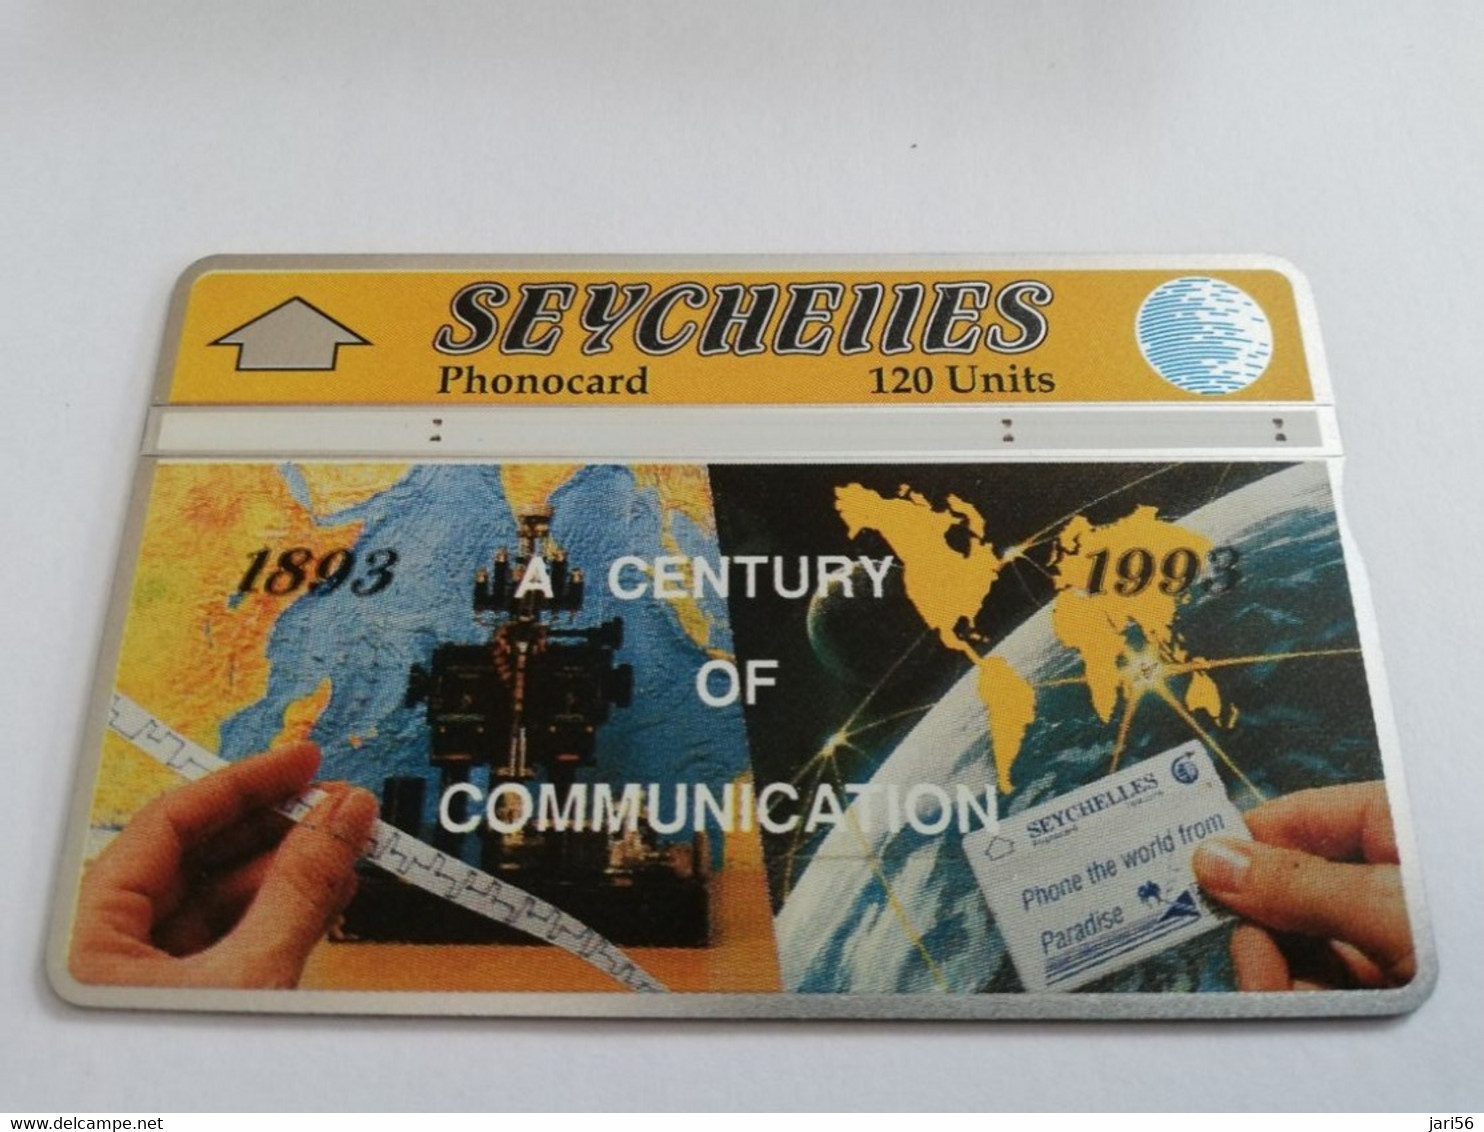 SEYCHELLES/SEYCHELLEN  120 UNITS  A CENTURY OF COMMUNICATION 1893-1993  L&G CARD     **5165** - Sychelles